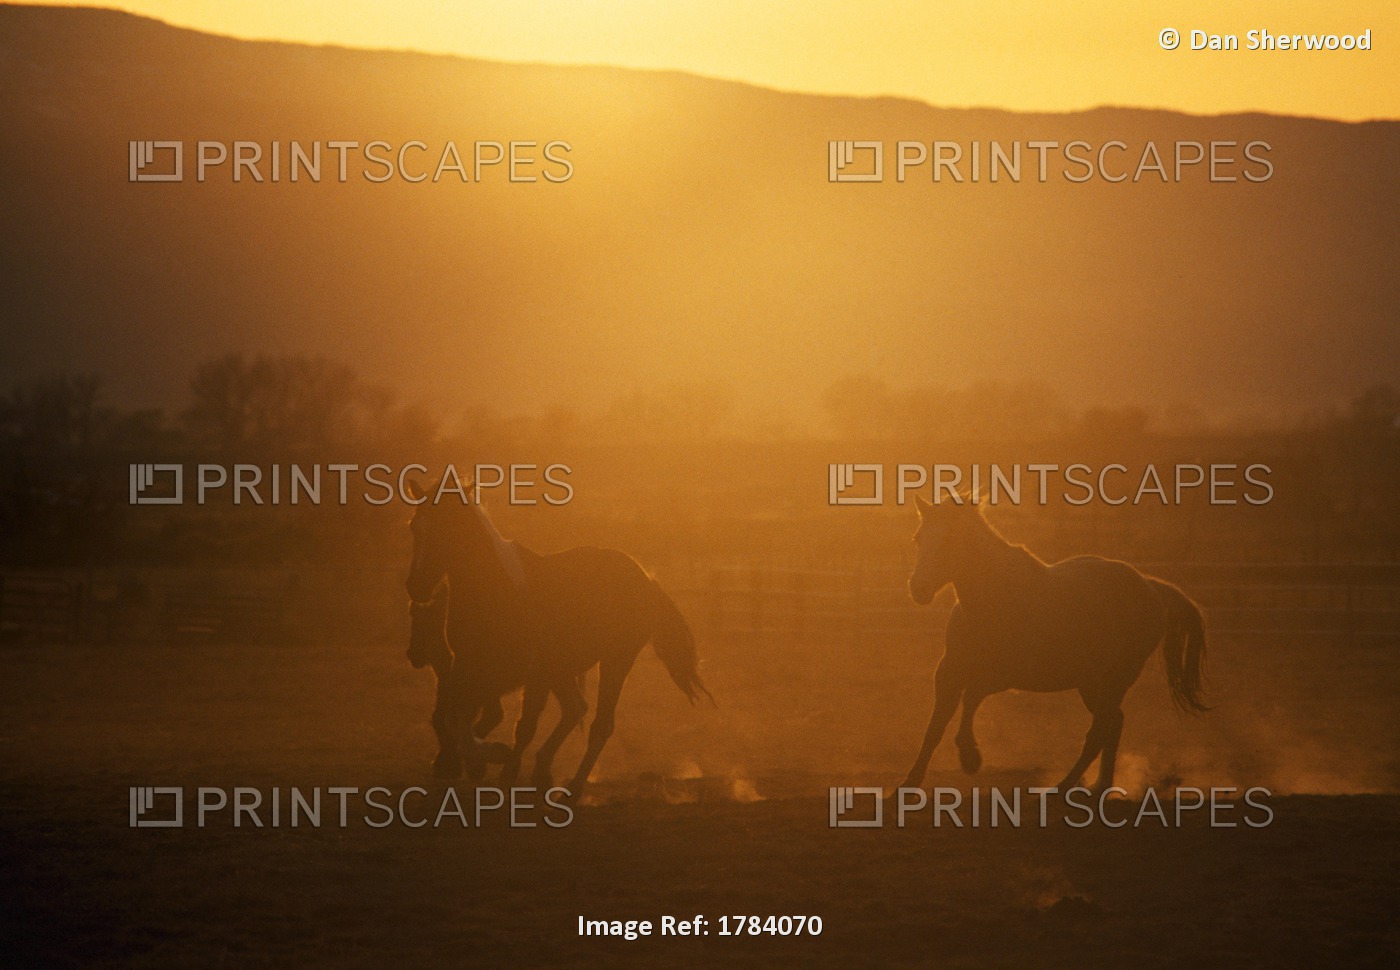 Horses In Sunset